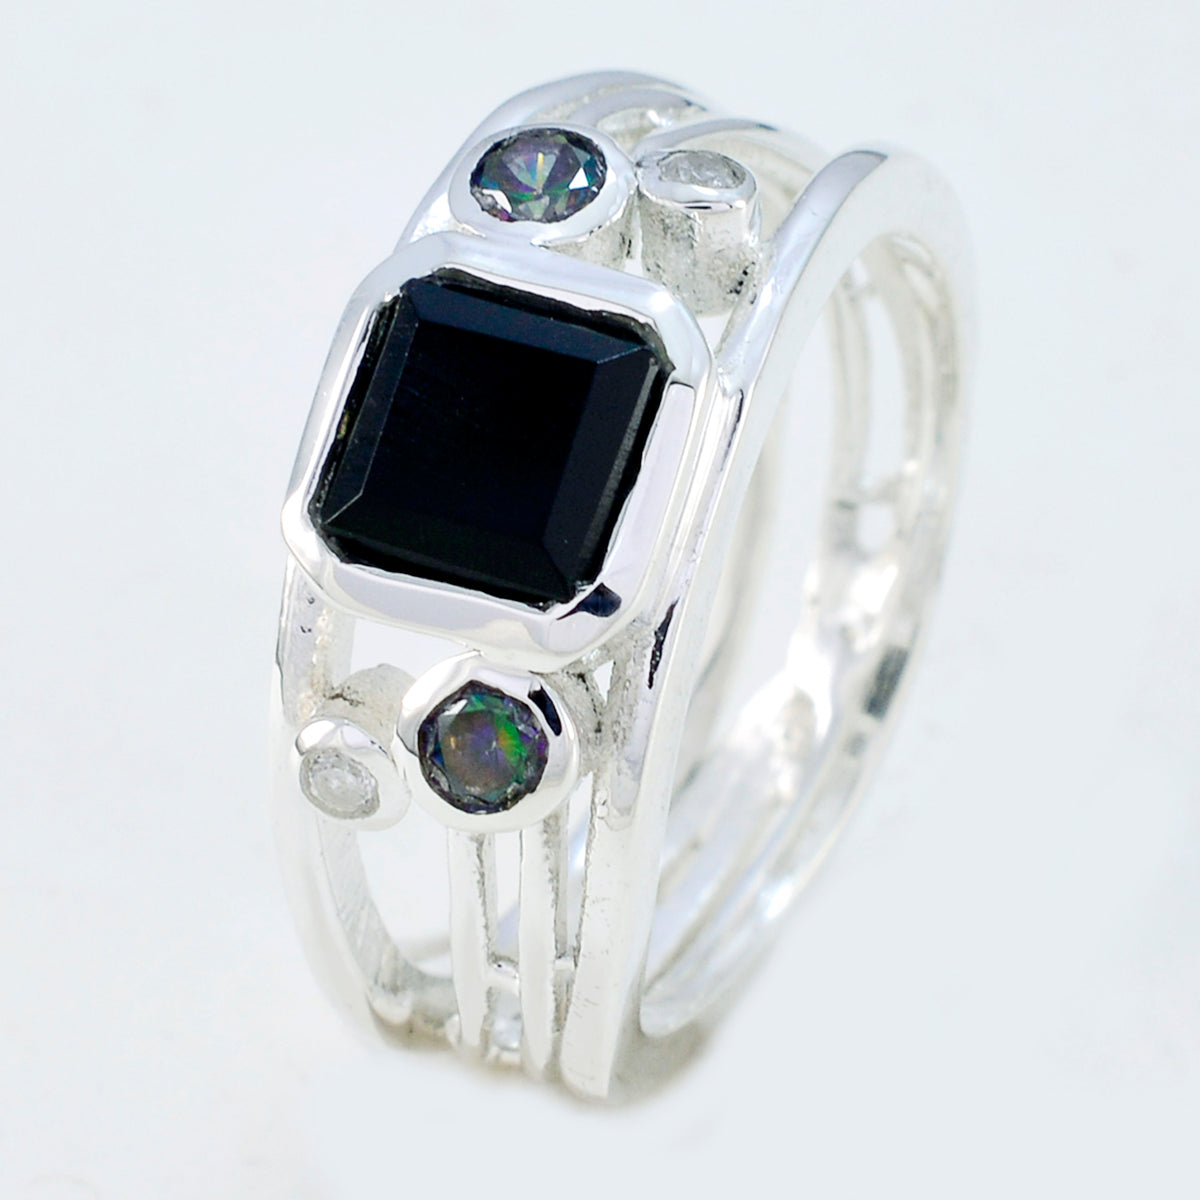 Riyo Drop-Dead Gemstones Black Onyx 925 Rings Jewelry Collection